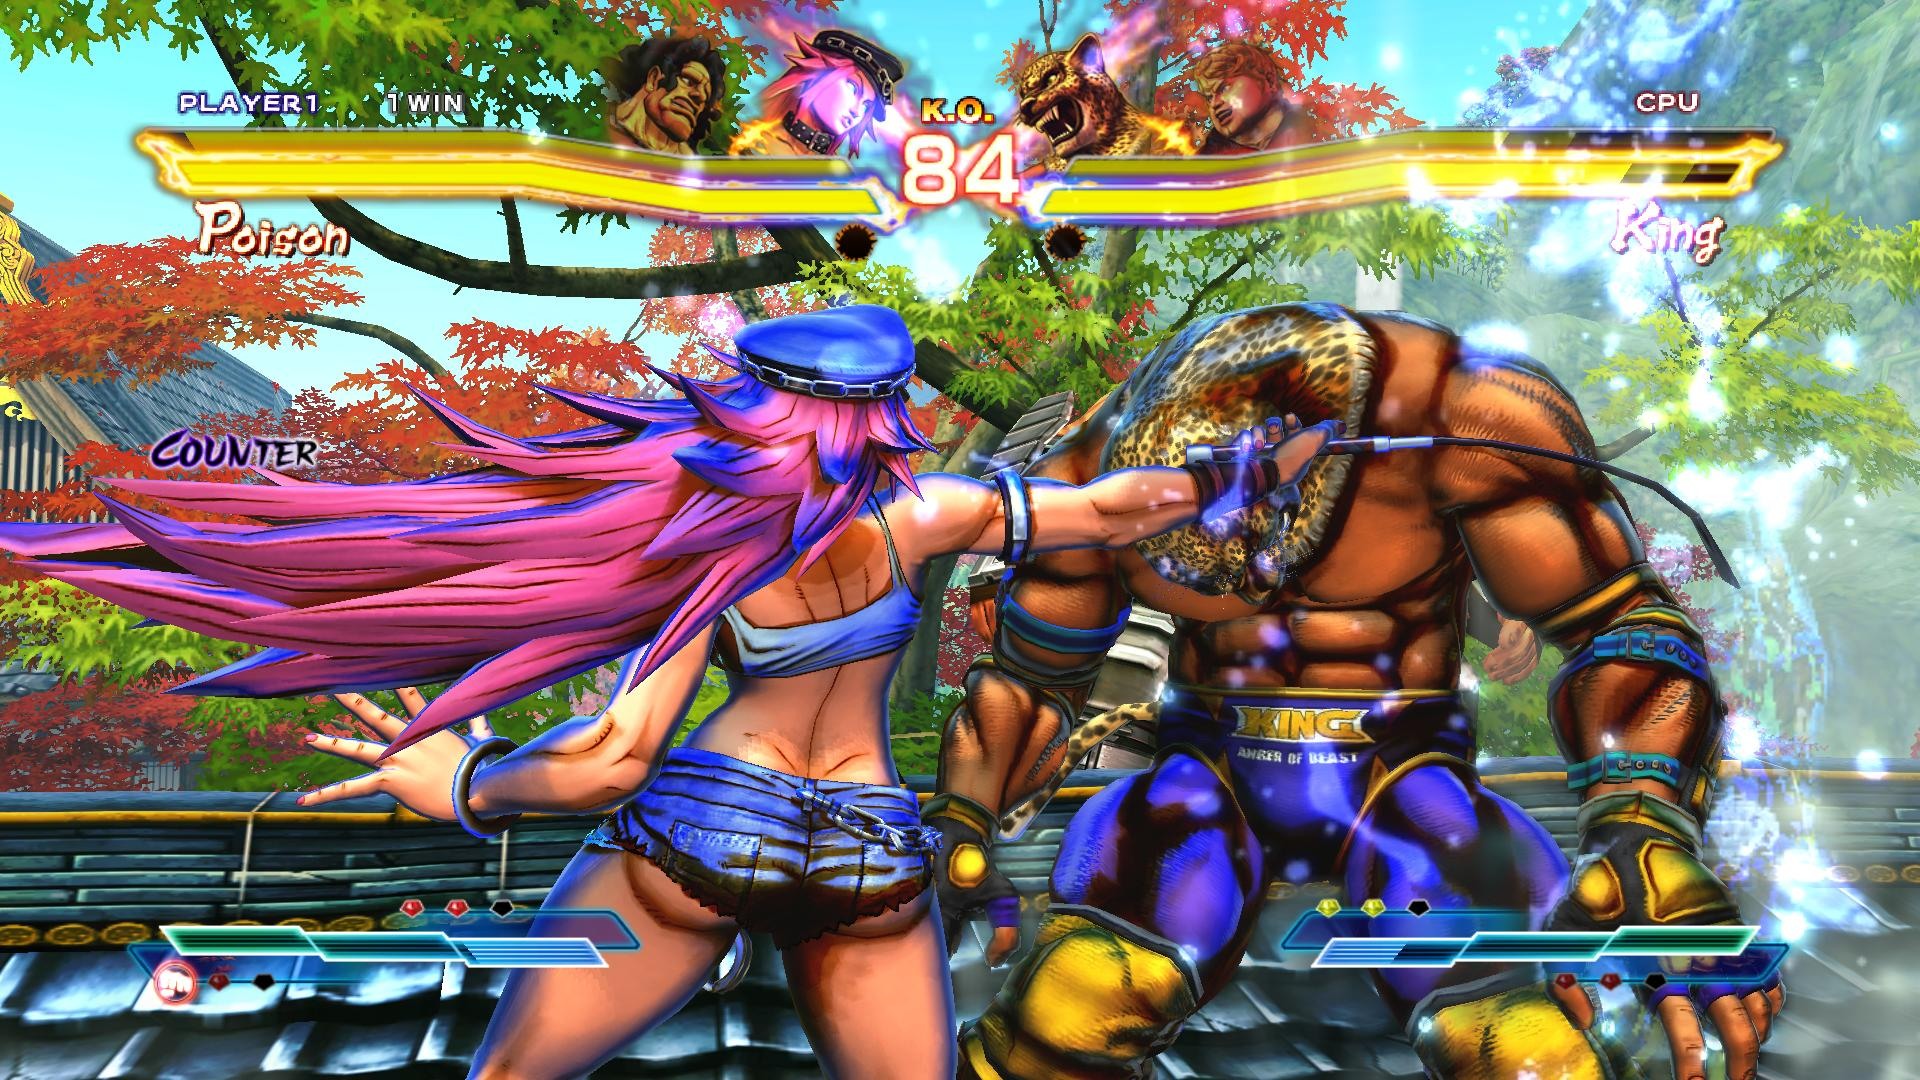 Massive Capcom, Square Enix Sale on PSN - “Street Fighter x Tekken” and “Tomb Raider” Among the Sale Titles